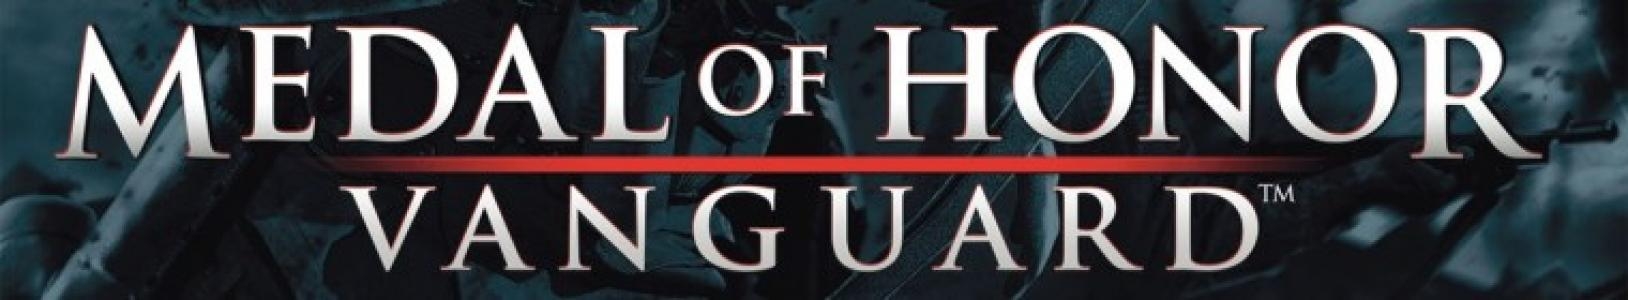 Medal of Honor: Vanguard banner